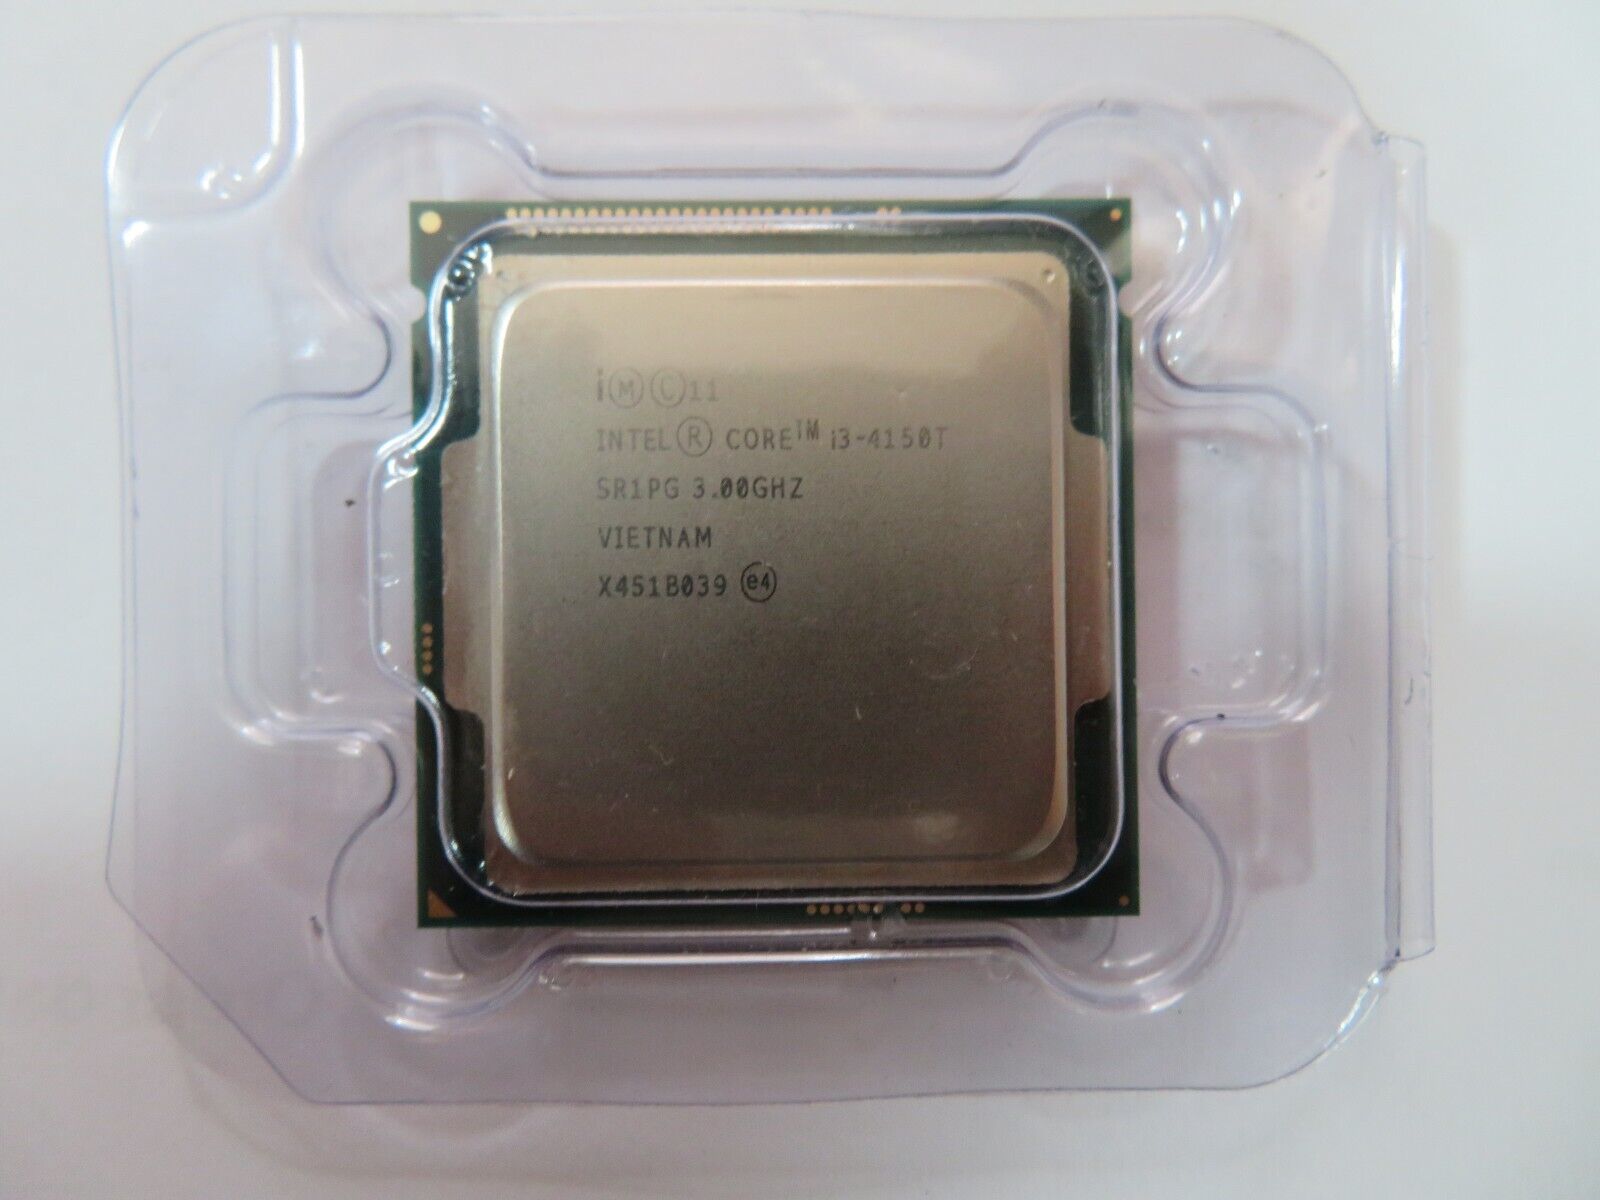 Intel Core i3-4150T SR1PG 3.00GHz Dual-Core CPU Processor